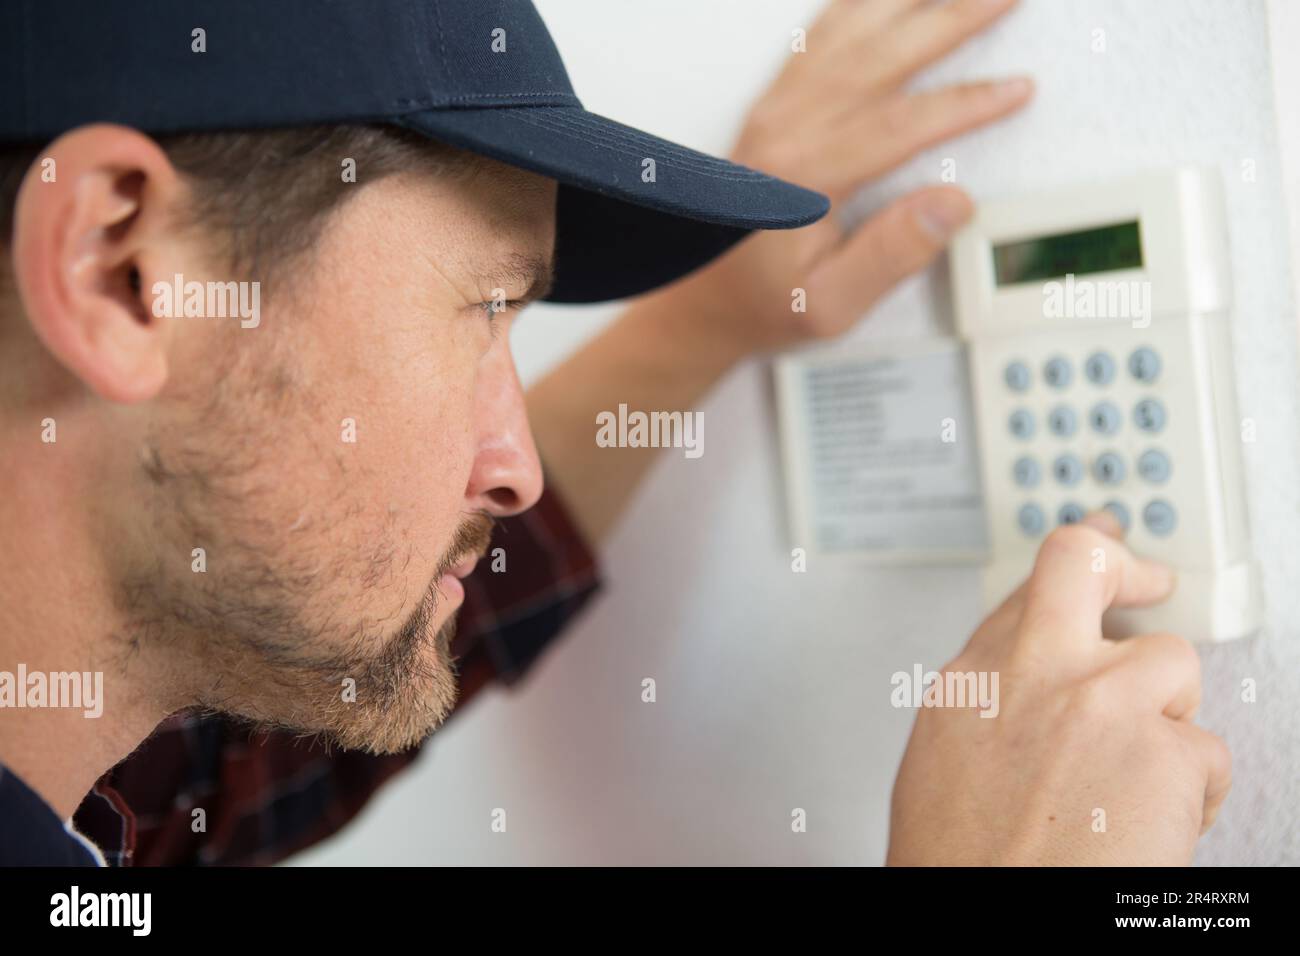 hvac technician fixing a thermostat Stock Photo